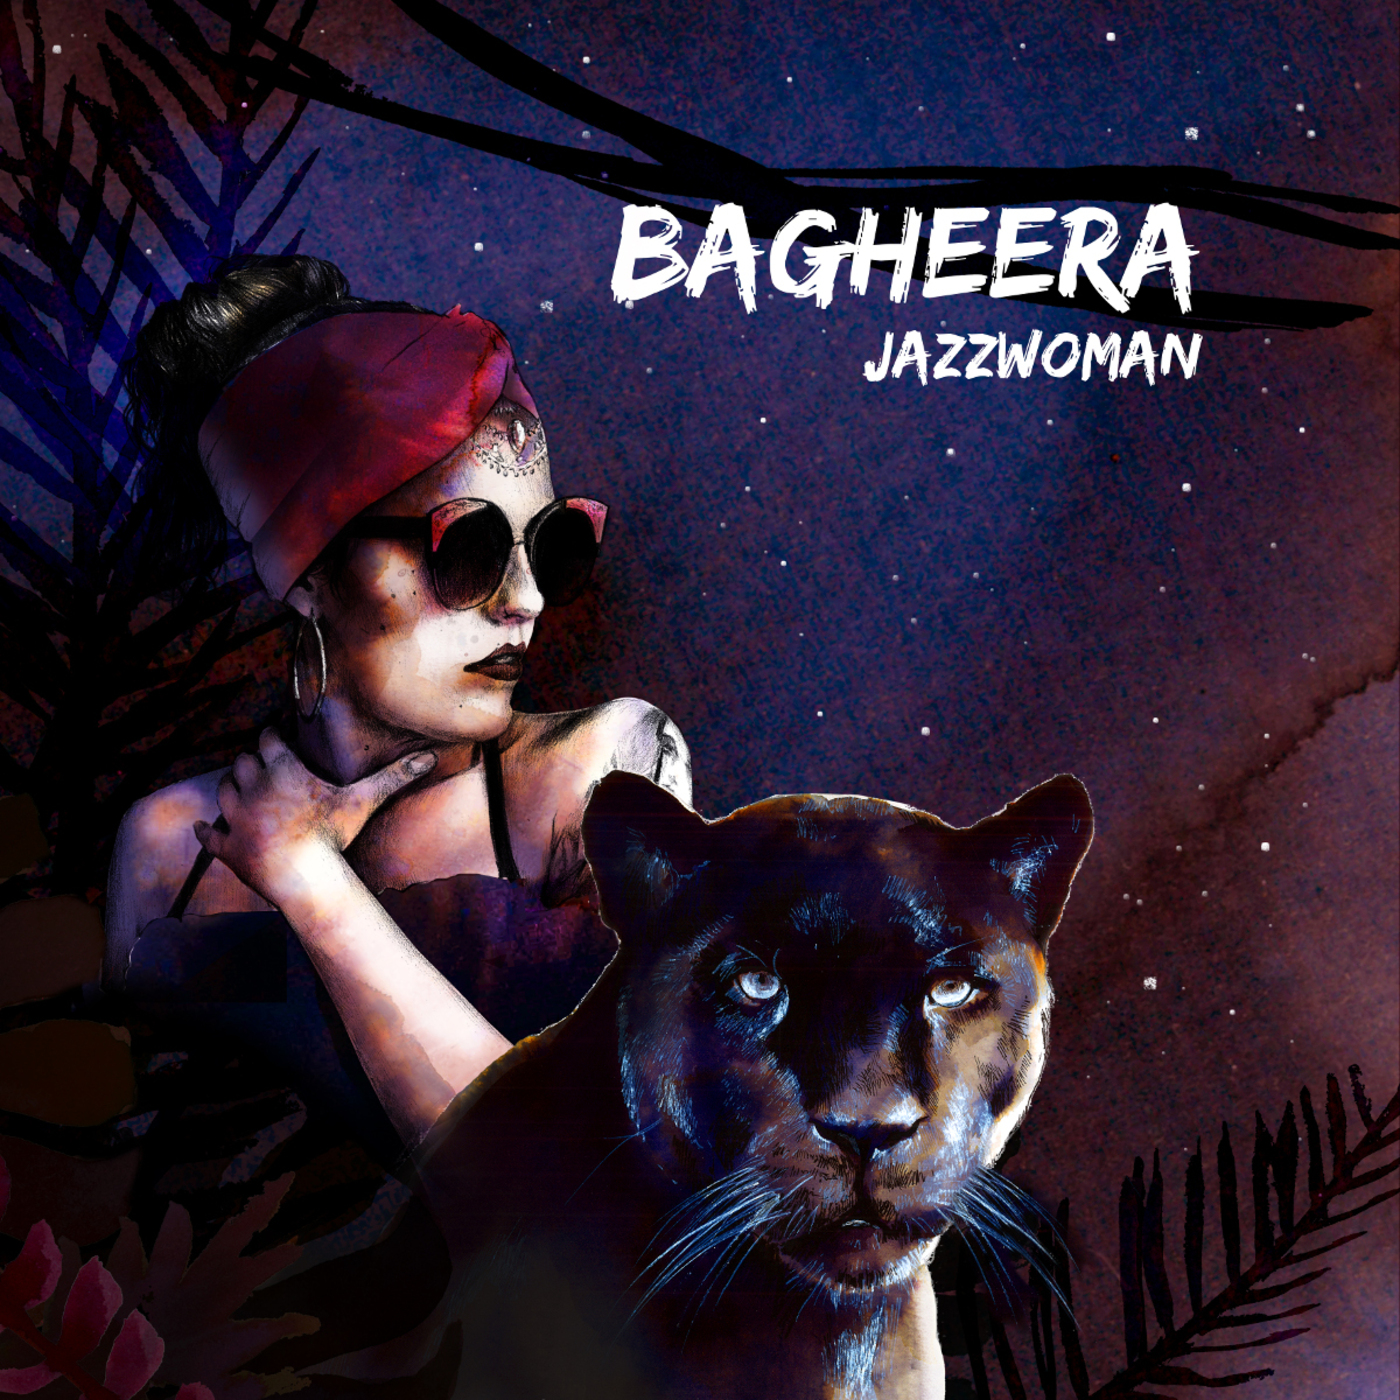 Jazzwoman - Bagheera | musica en valencià